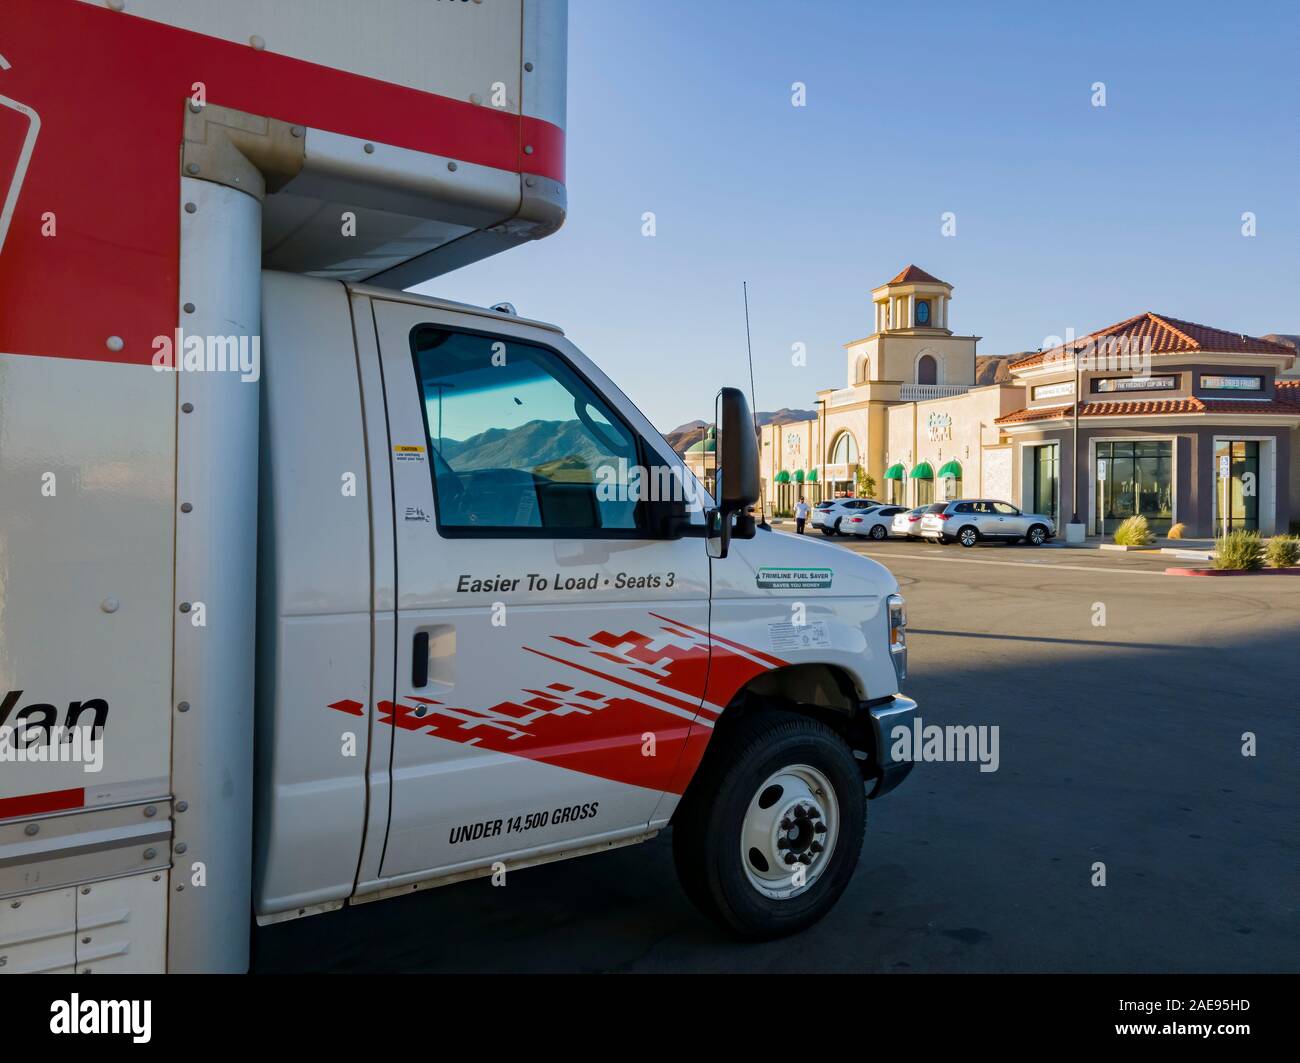 Las Vegas, AUG 15: Big U-Hual truck on the way  on AUG 15, 2019 at Las Vegas, Nevada Stock Photo